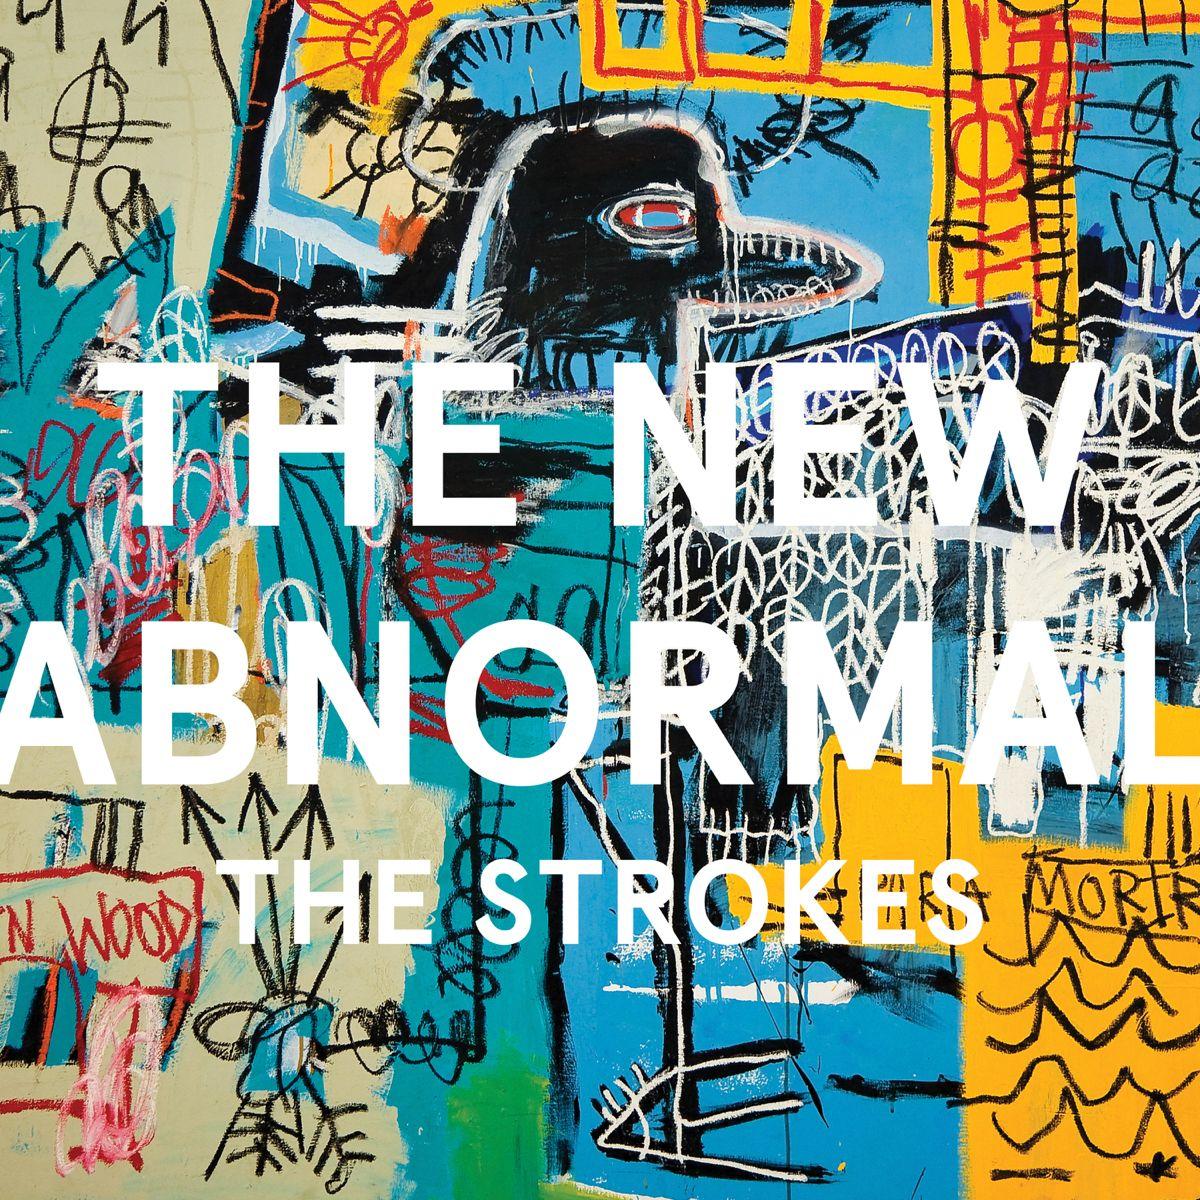 The+Strokes+The+New+Abnormal+album+released+April+10%2C+2020.